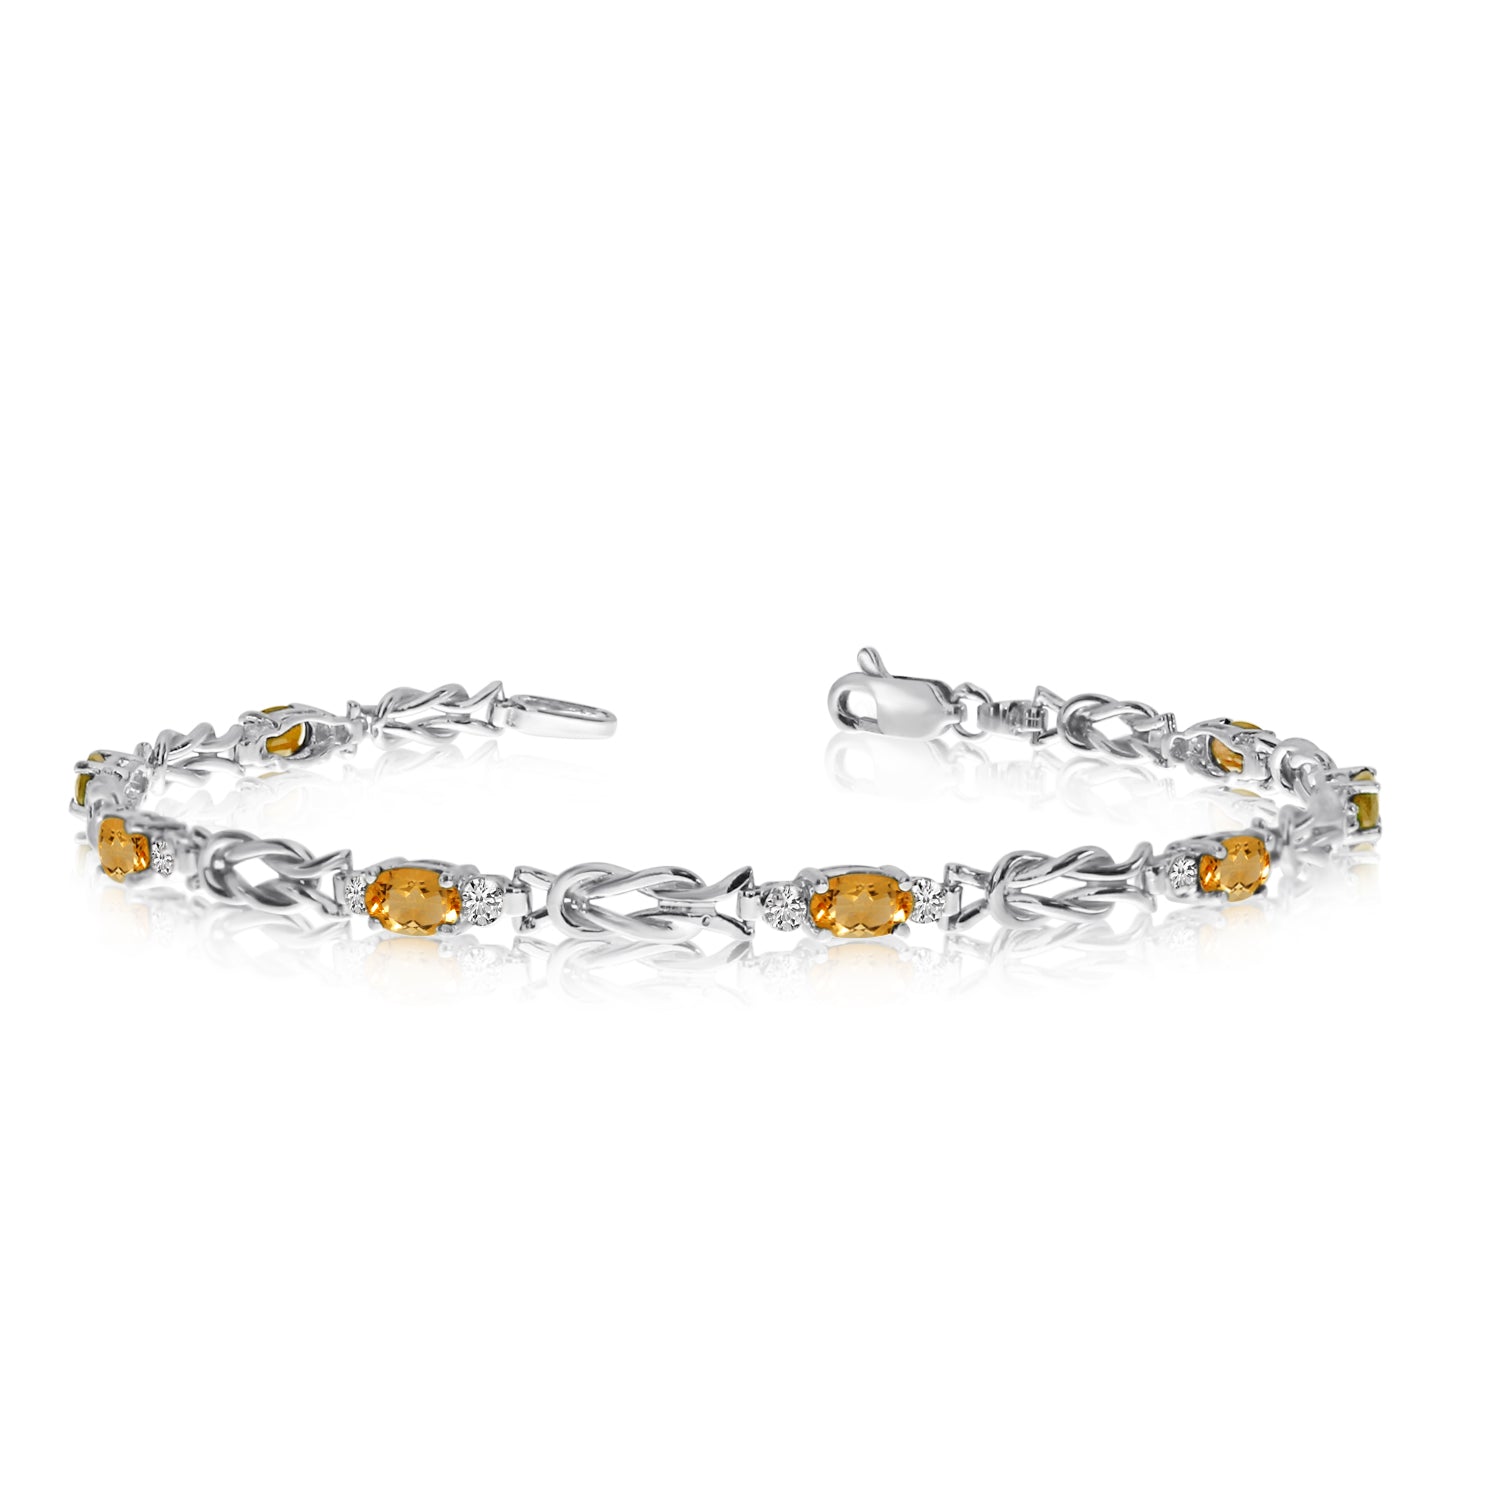 14K White Gold Oval Citrine Stones And Diamonds Tennis Bracelet, 7" fine designer jewelry for men and women